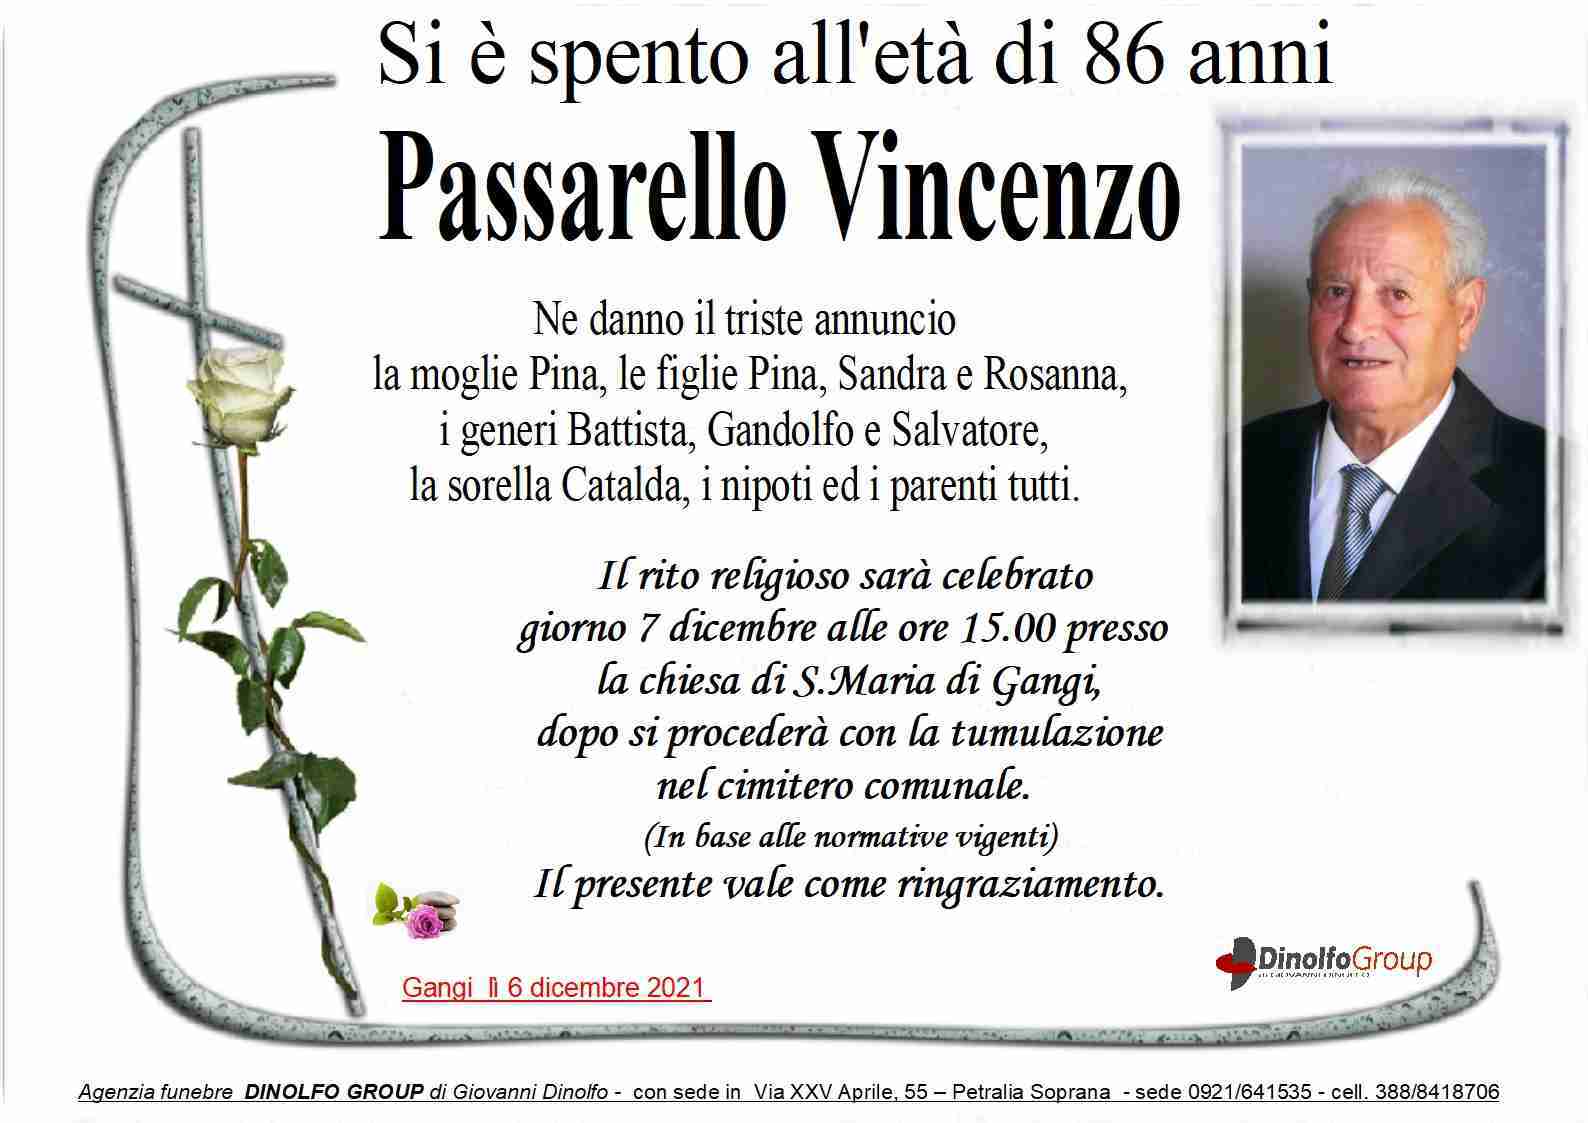 Vincenzo Passarello